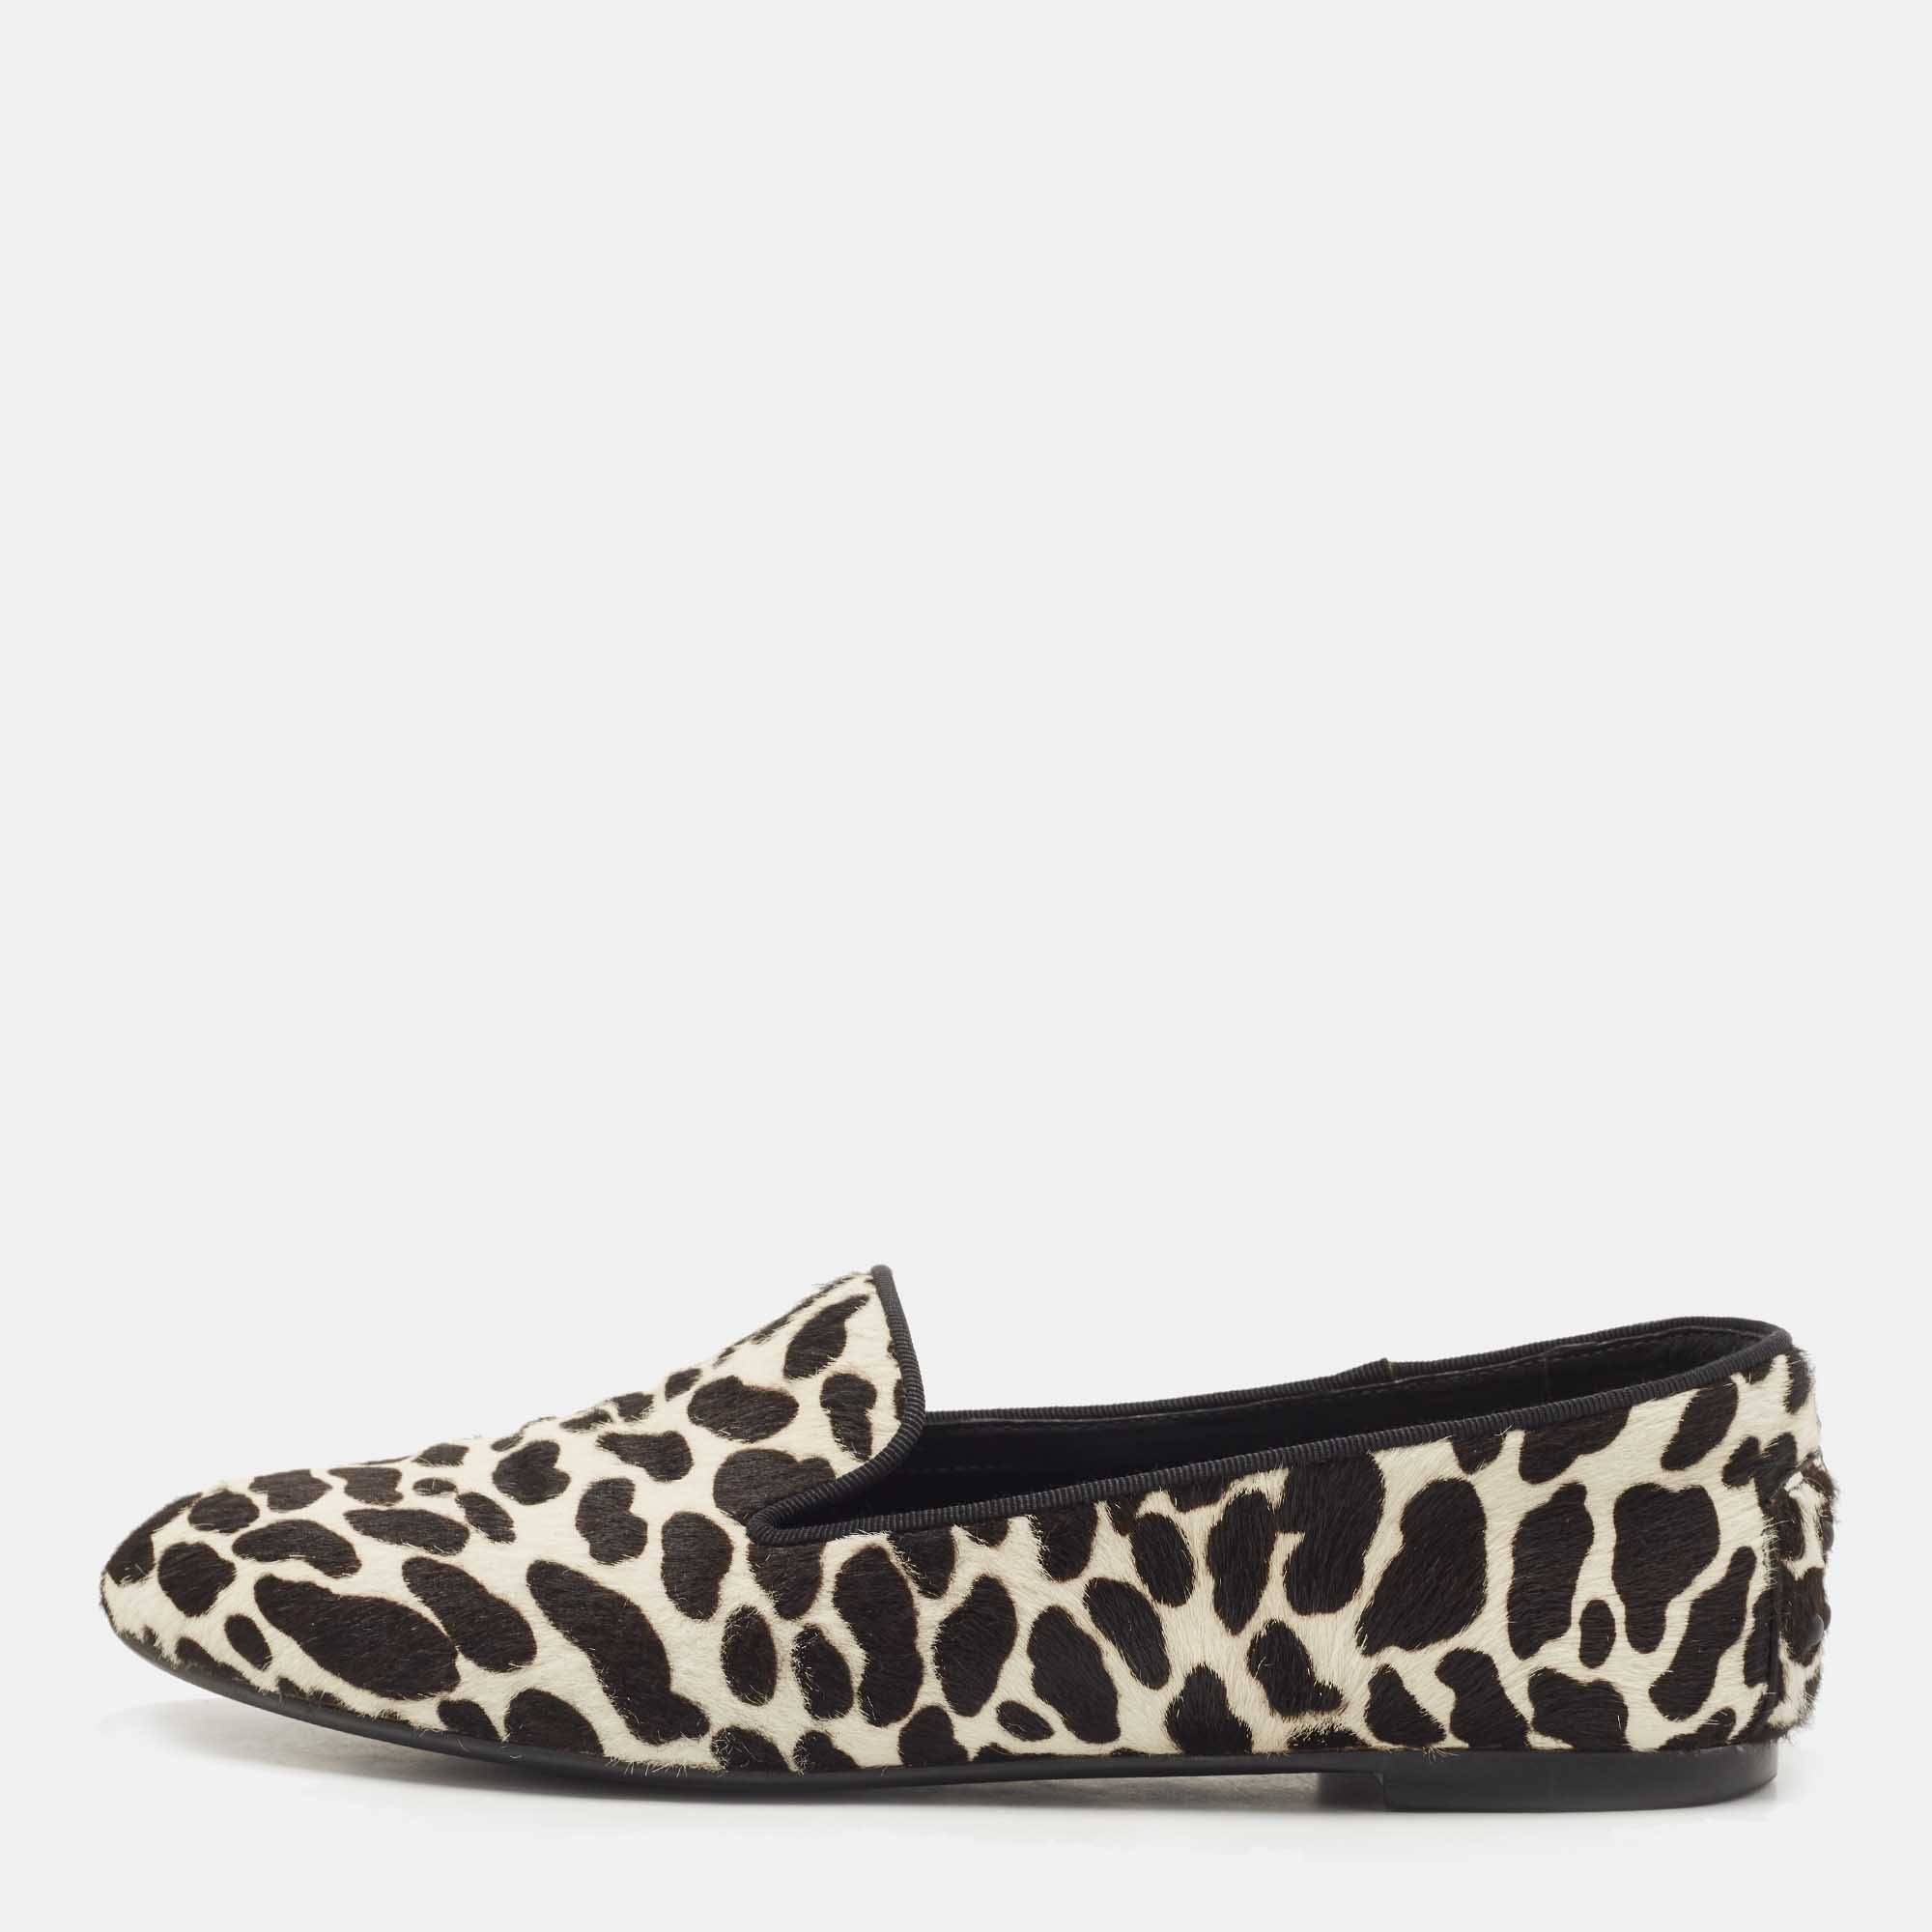 Tod's black/white leopard print calf hair smoking slippers size 36.5